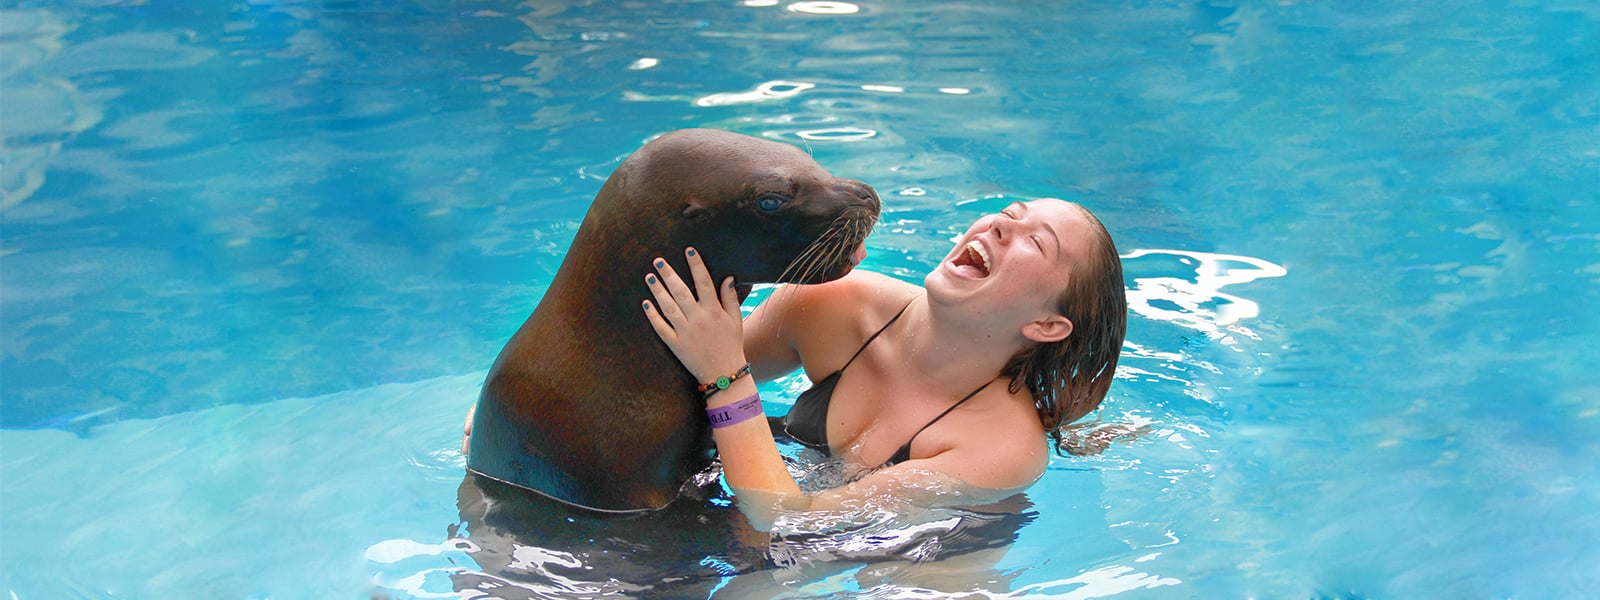 Swim with a funny sea lion in Puerto Vallarta | Dolphin Adventure